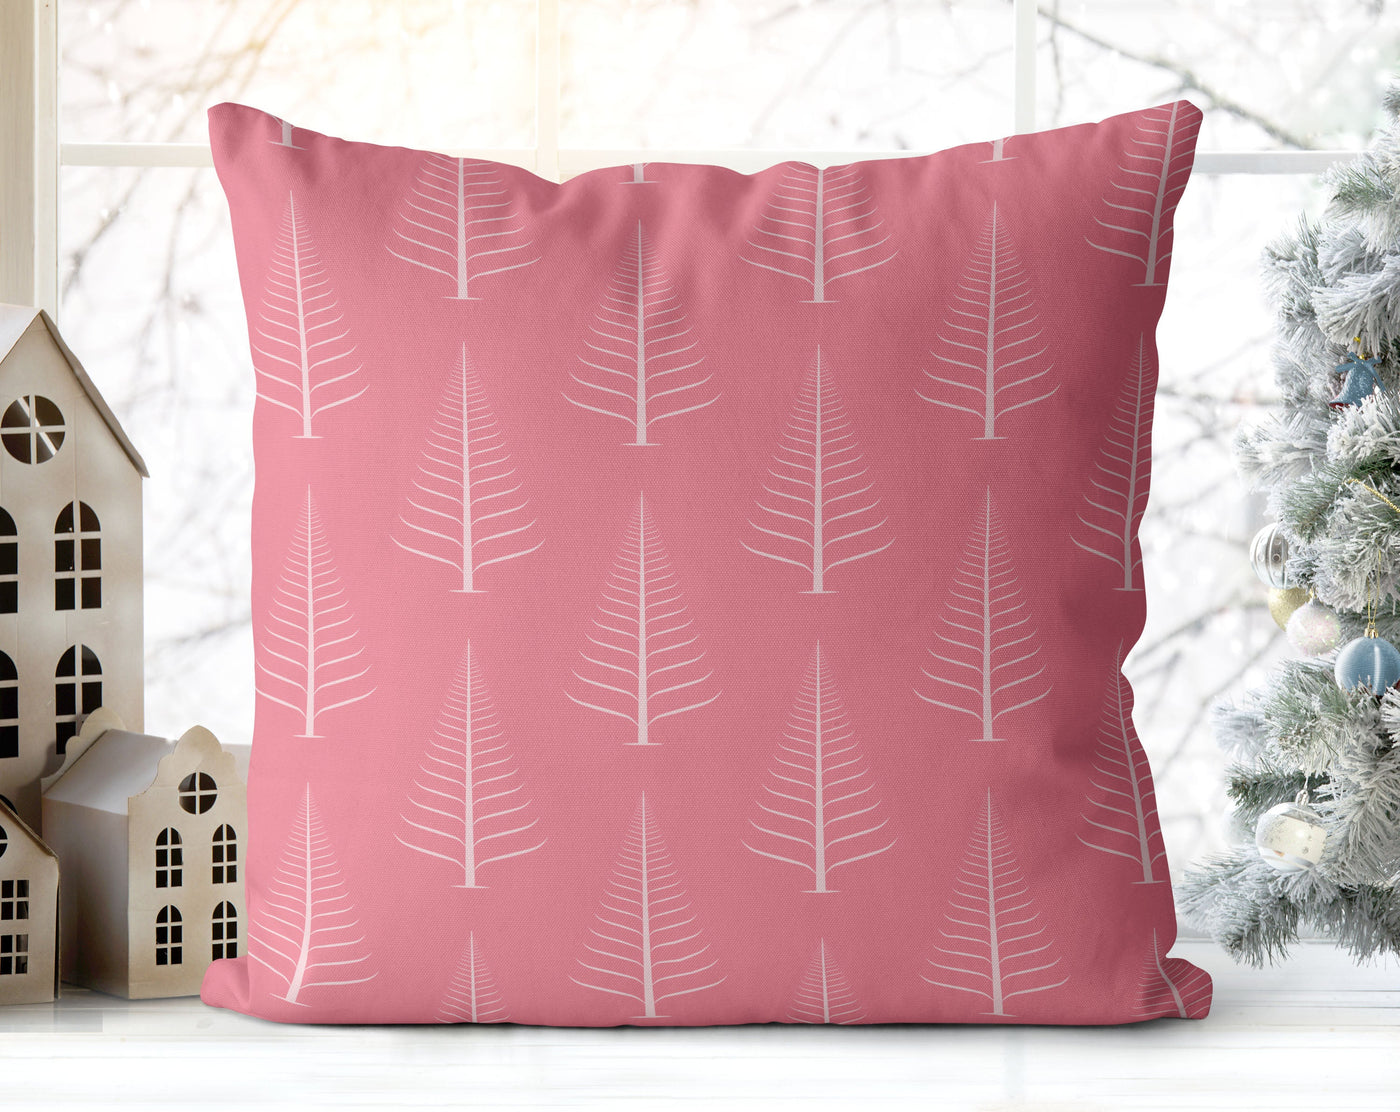 Gentle Winter Christmas Trees Carnation Pink Pillow Throw - Cush Potato Pillows